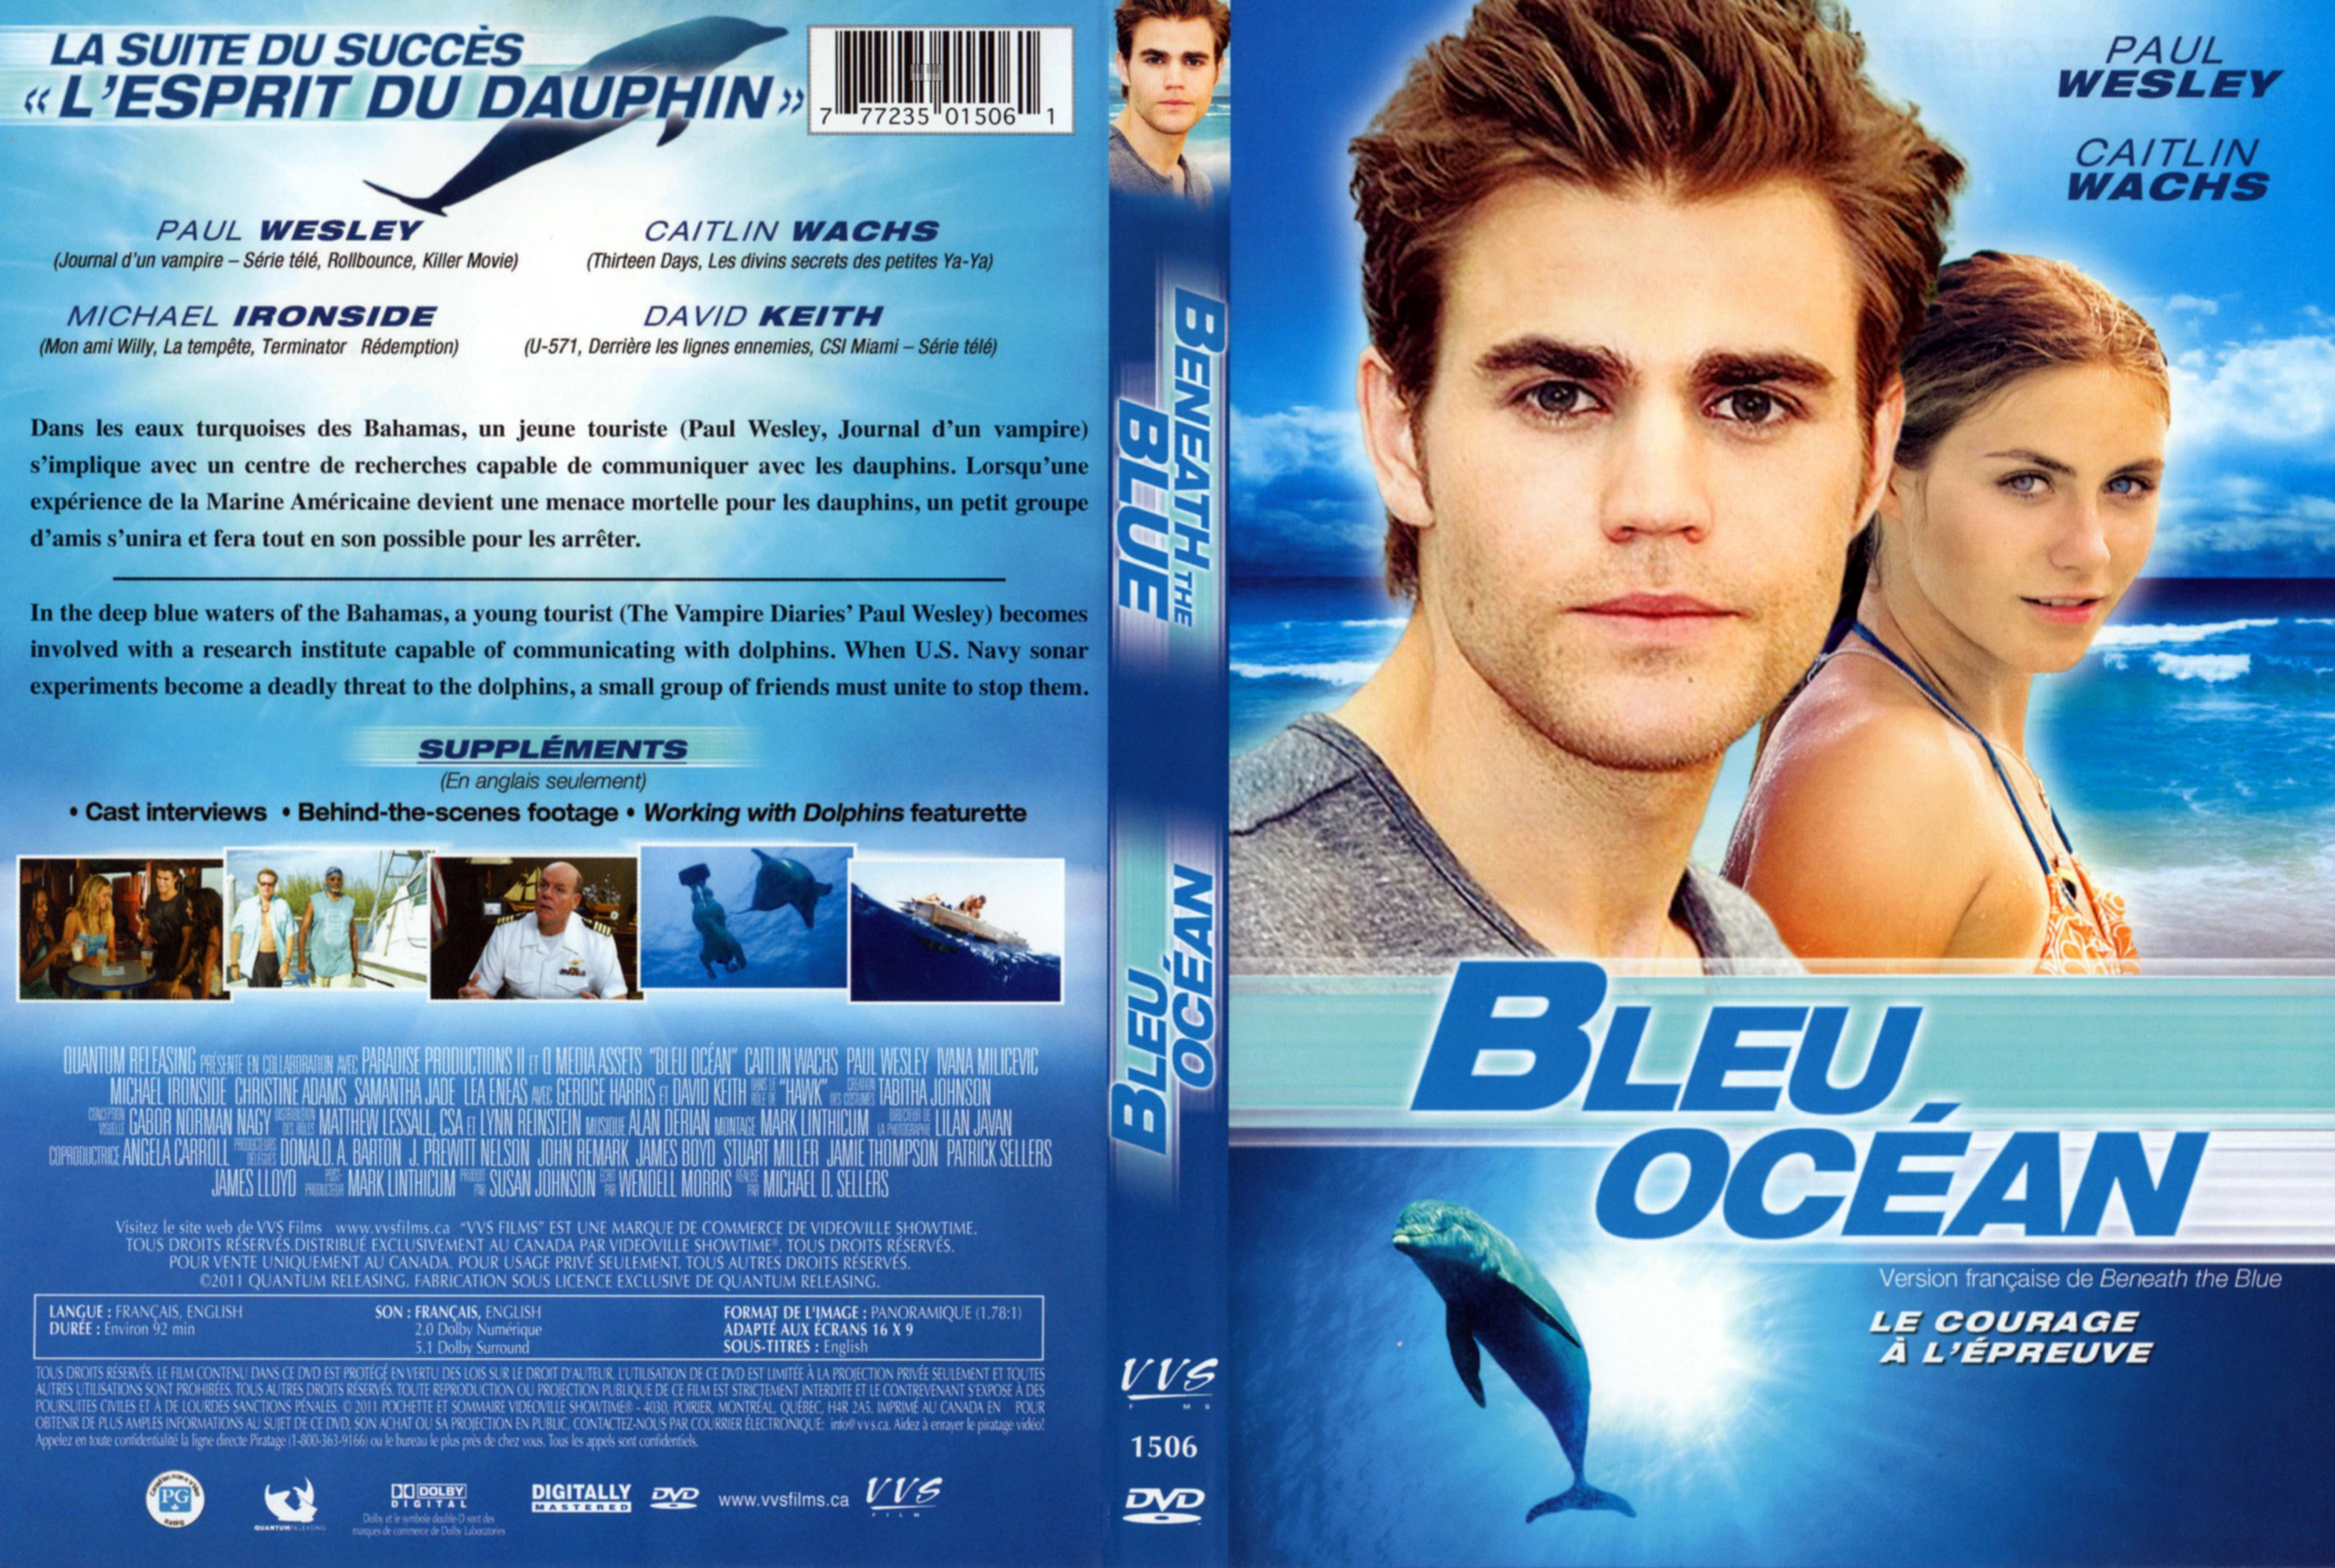 Jaquette DVD Bleu ocean (Canadienne)